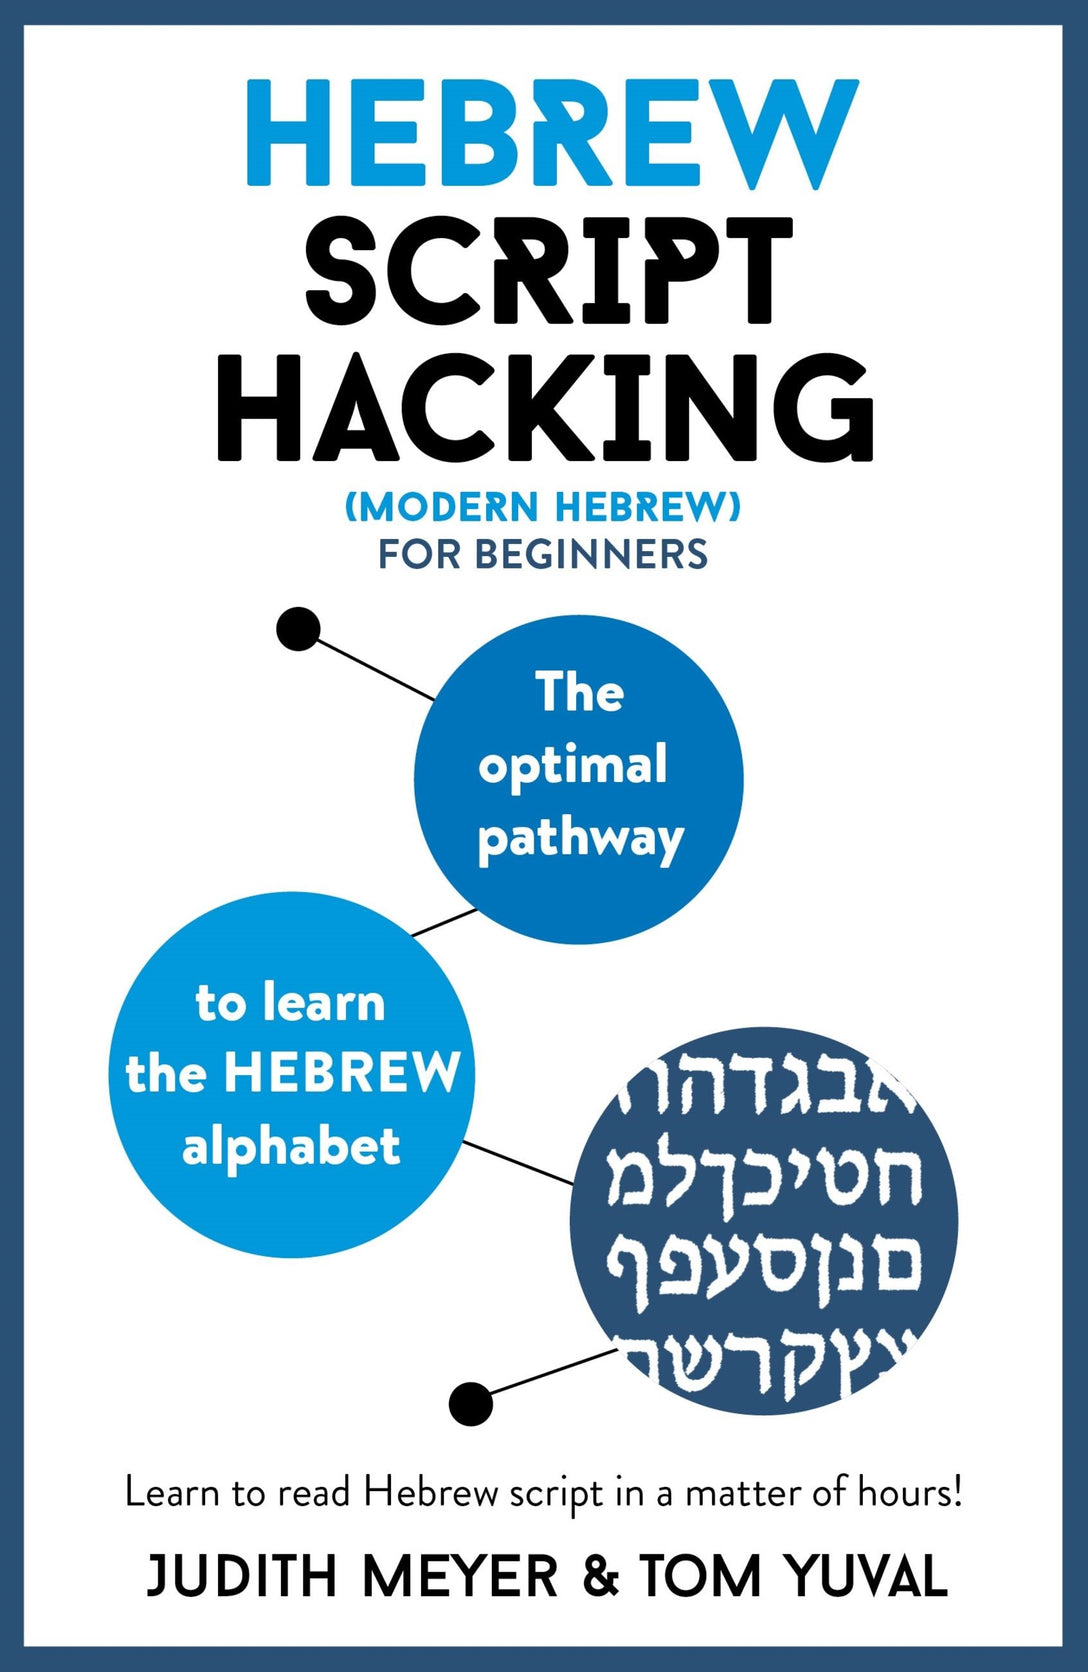 Hebrew Script Hacking by Judith Meyer, Tom Yuval